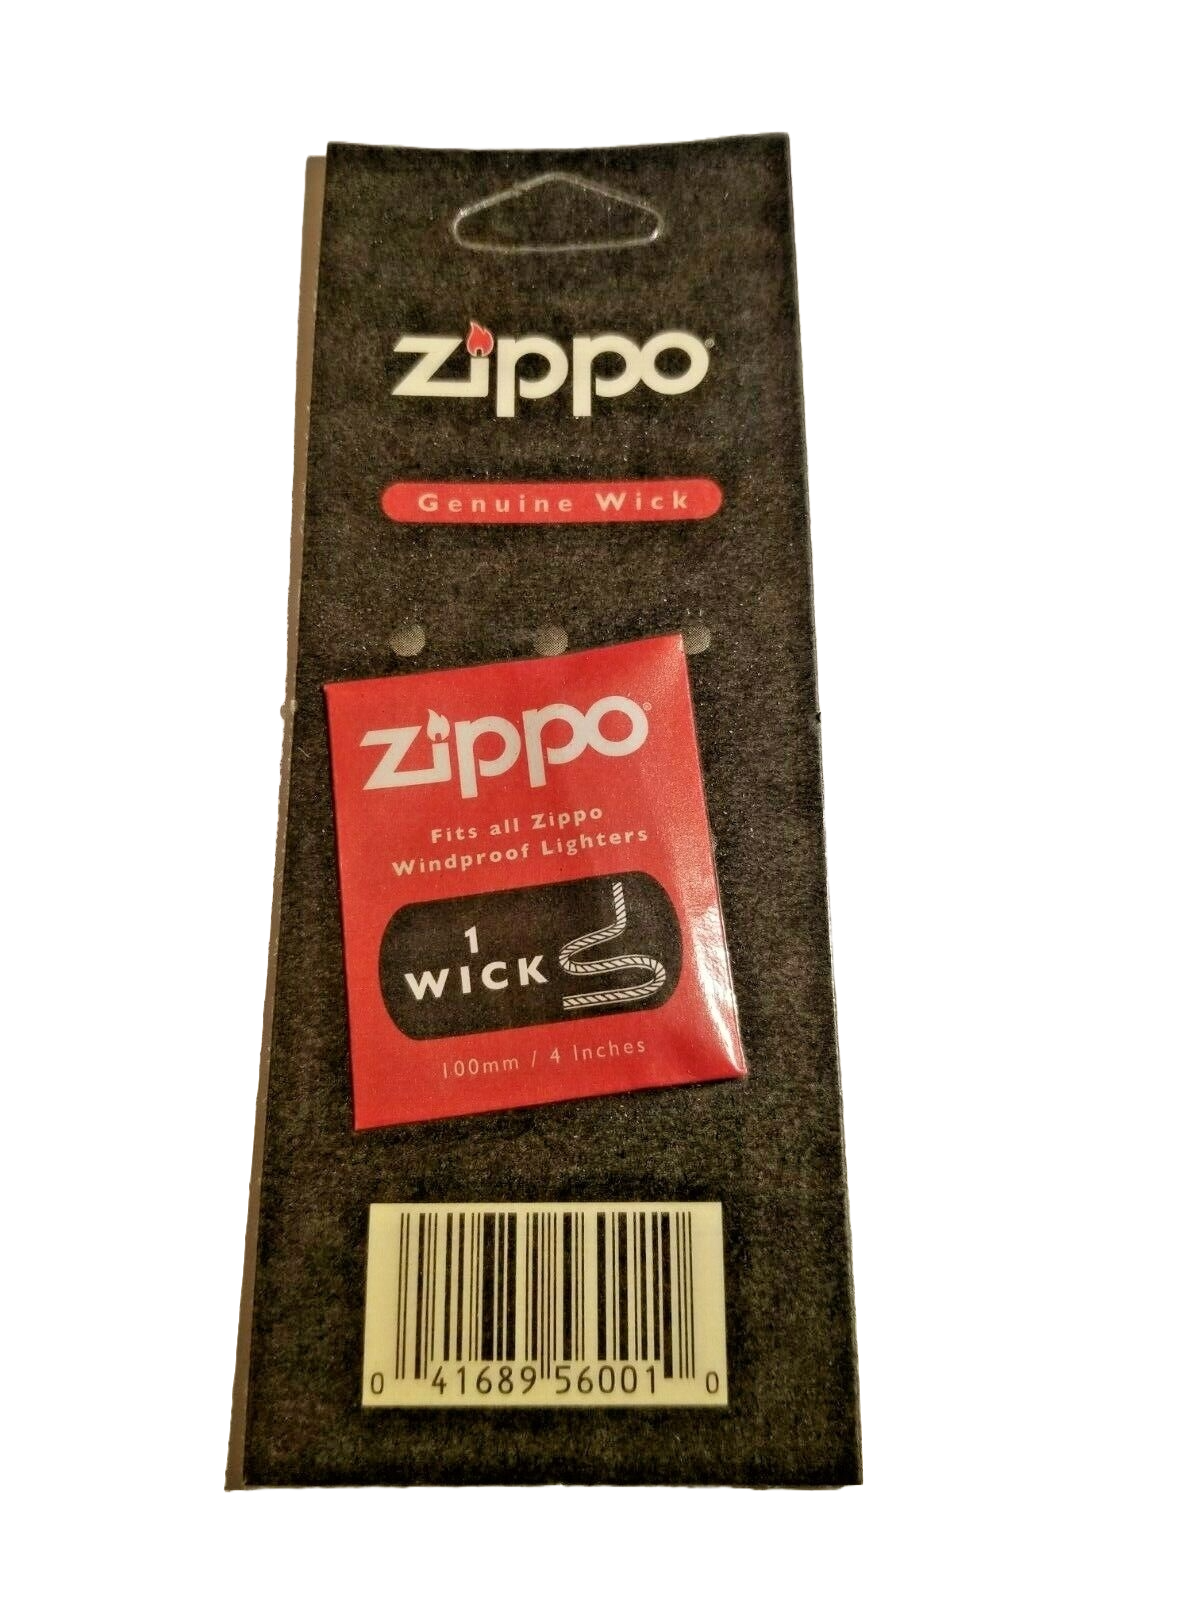 Authentic Zippo Replacement Lighter Flint 1 Pack, 6 Flints for